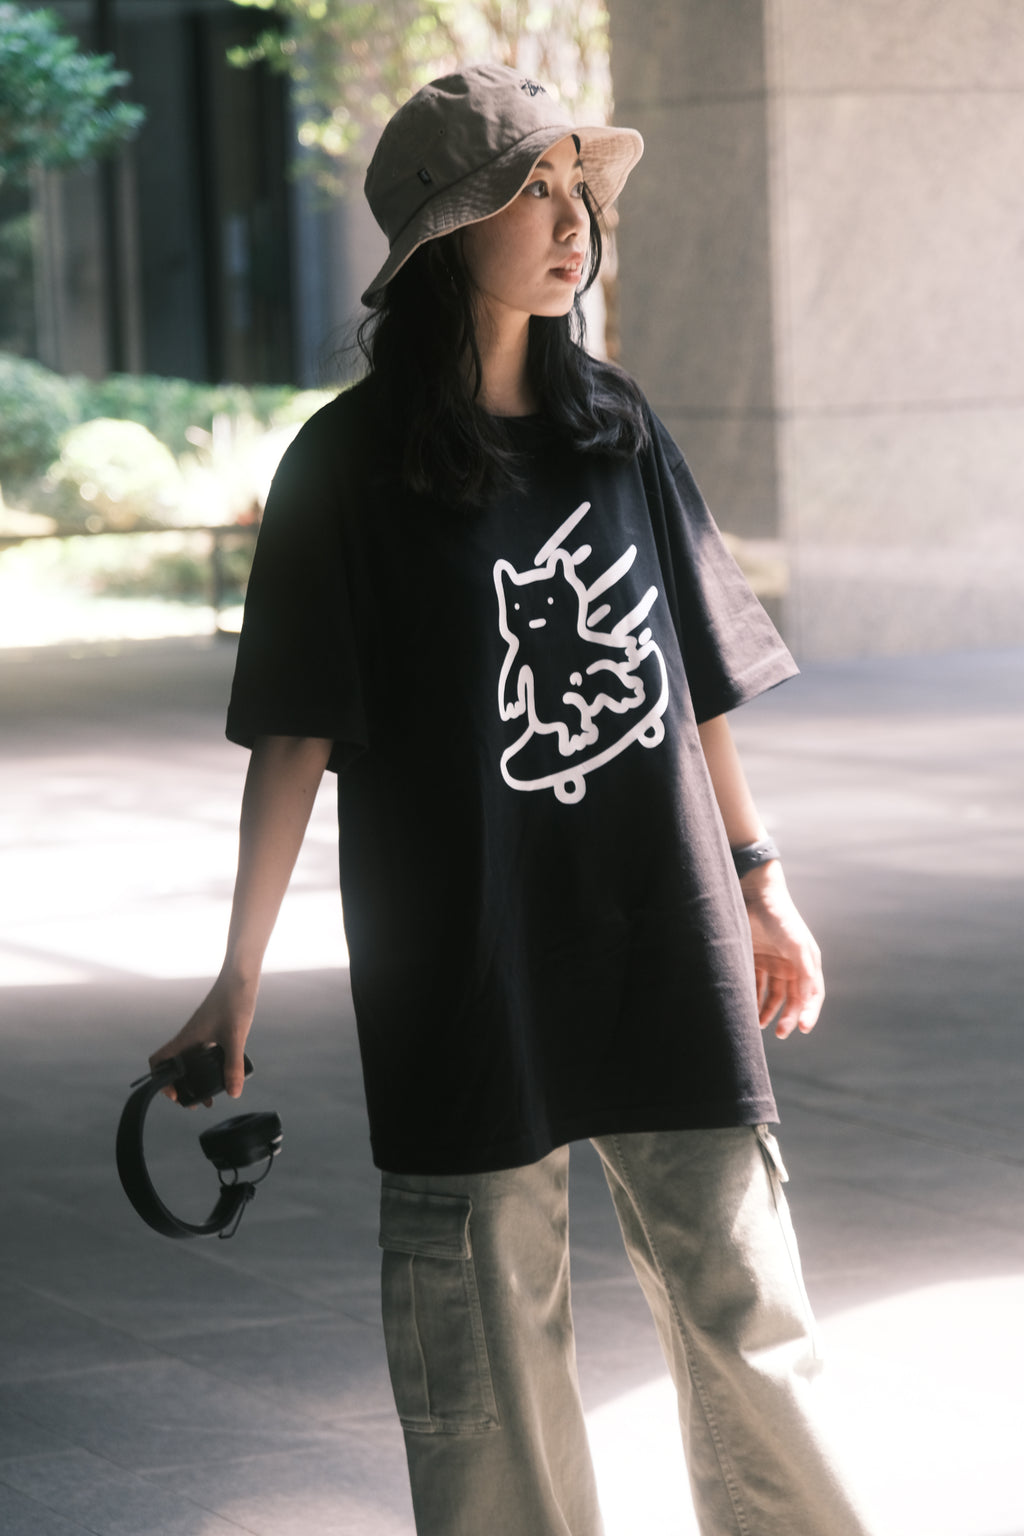 Skater Cat T-Shirt (Black) 滑板貓T恤(黑色)